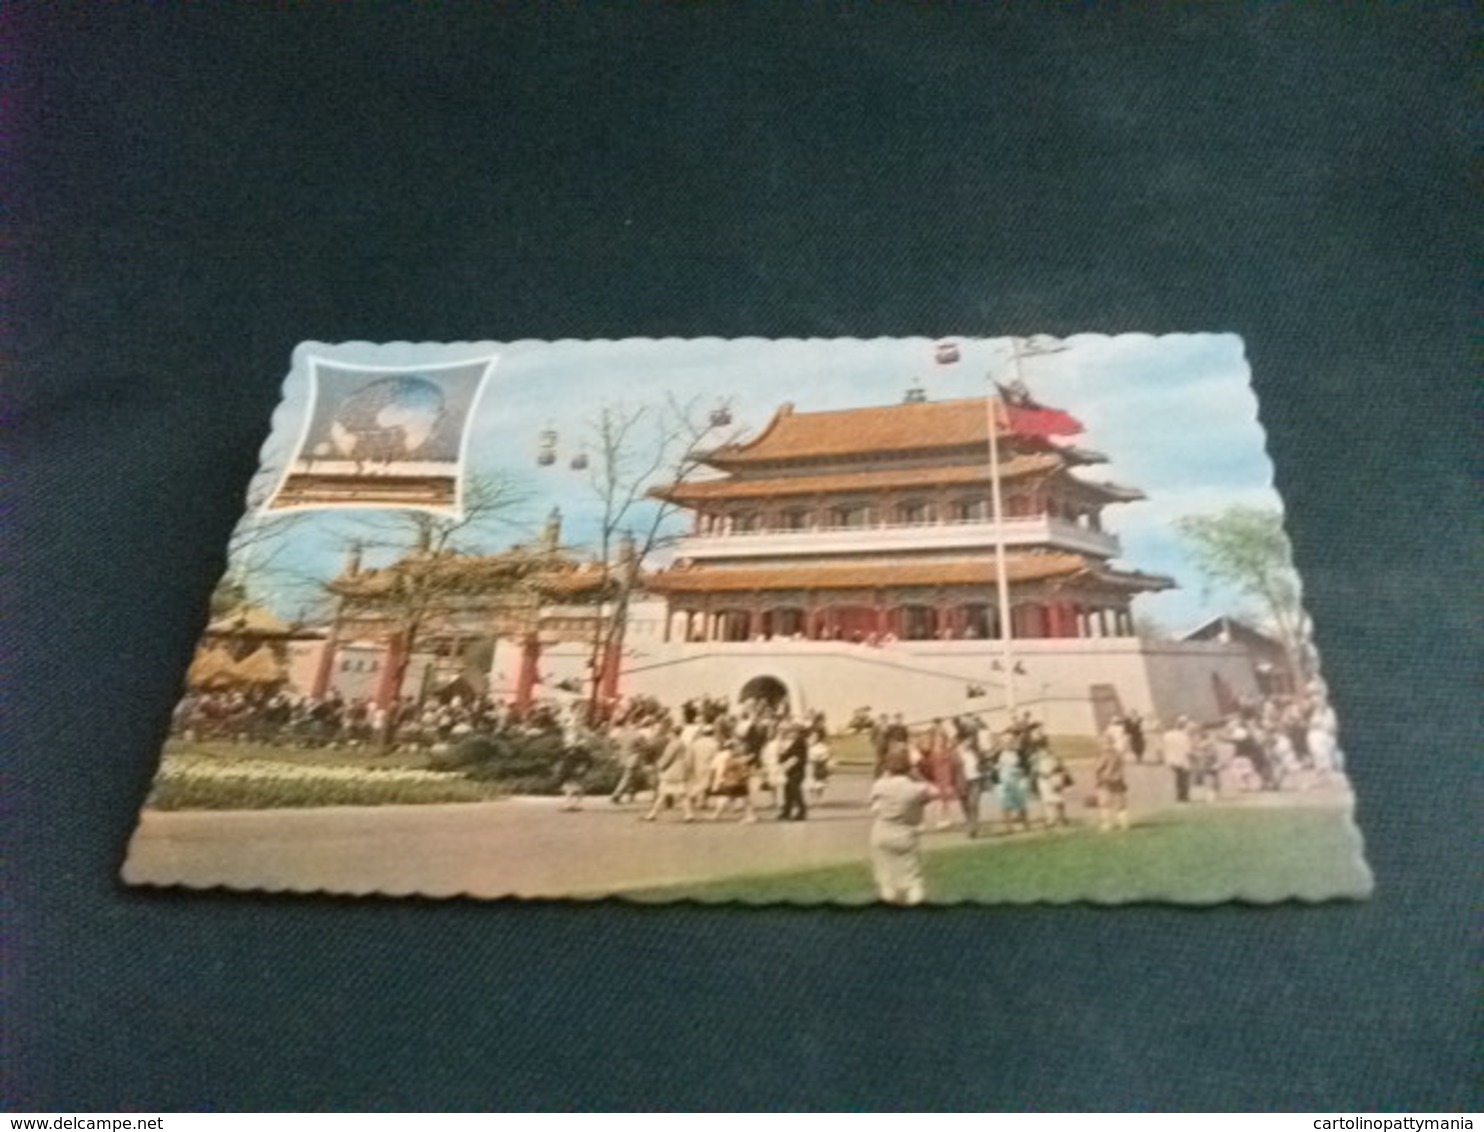 PICCOLO FORMATO ESPOSIZIONE EXPOSITION PAVILION CHINA CINA NEW YORK 1964 65 WOELD'S FAIR PALACE THROUGH UNDERSTANDING - Ausstellungen